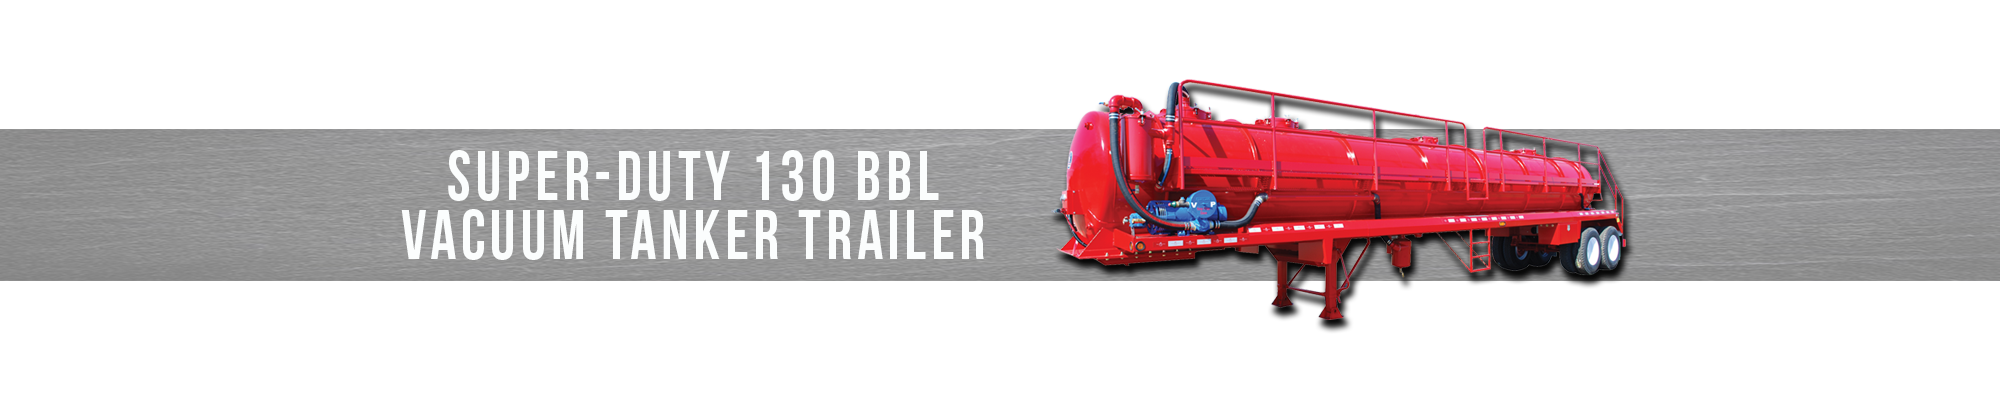 Super-Duty 130 BBL Vacuum Tanker Trailer